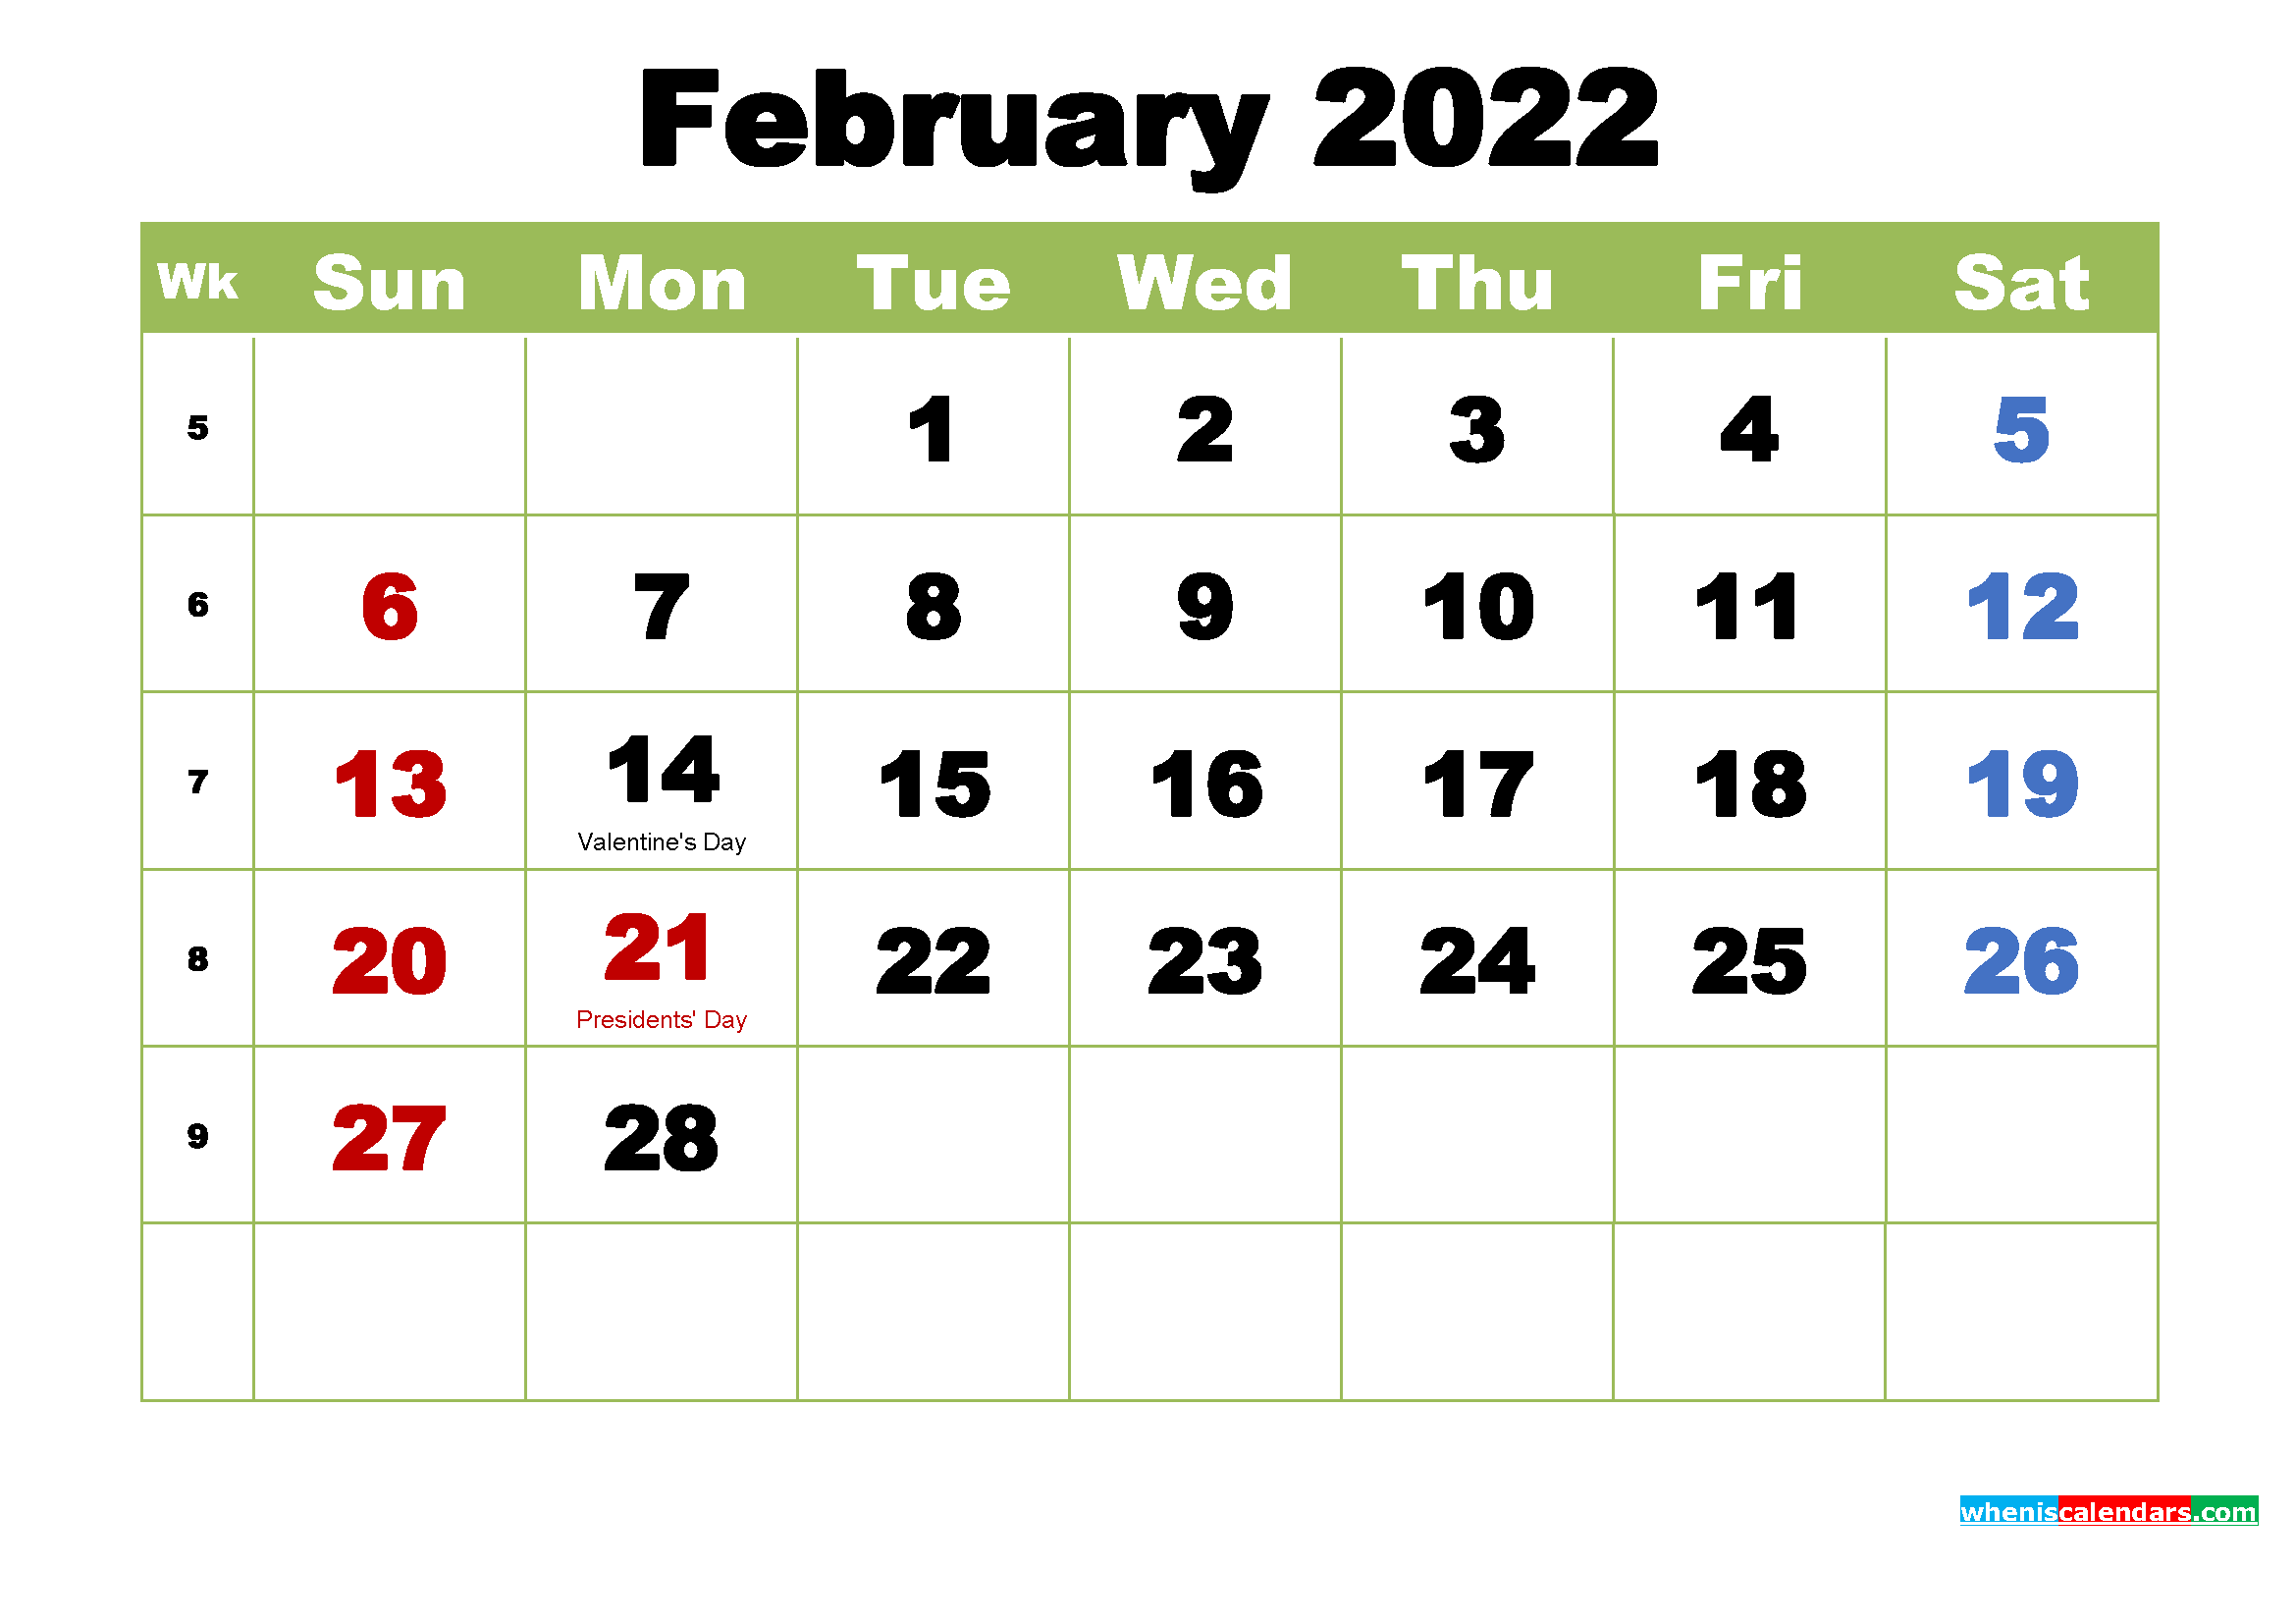 February 2022 Calendar With Holidays Free February 2022 Calendar With Holidays Printable